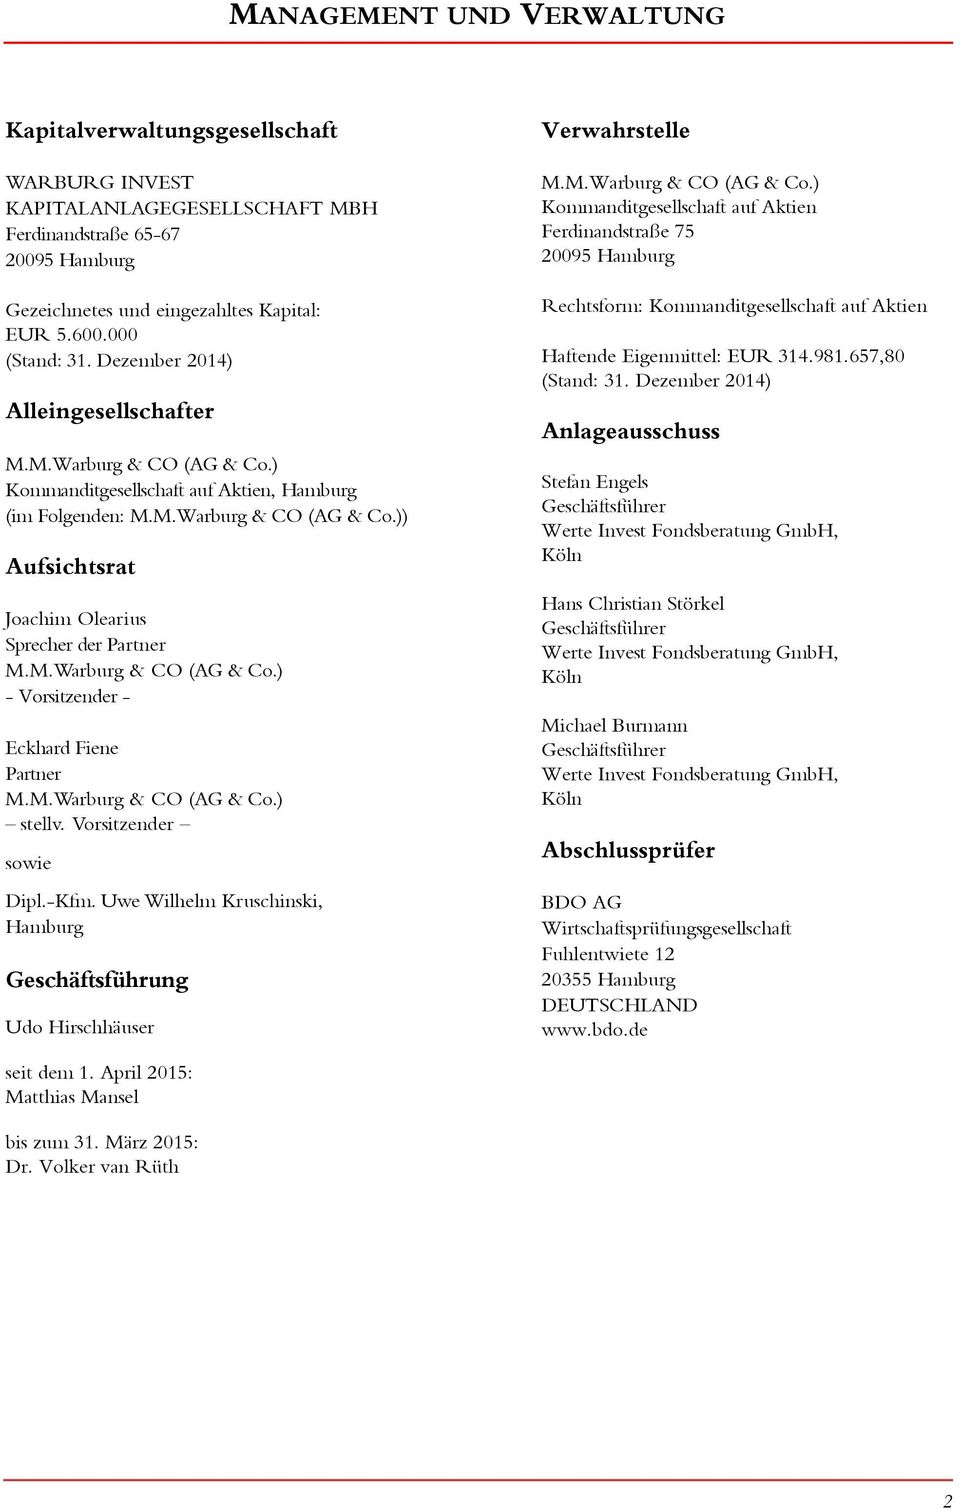 M.Warburg & CO (AG & Co.) - Vorsitzender - Eckhard Fiene Partner M.M.Warburg & CO (AG & Co.) stellv. Vorsitzender sowie Dipl.-Kfm.